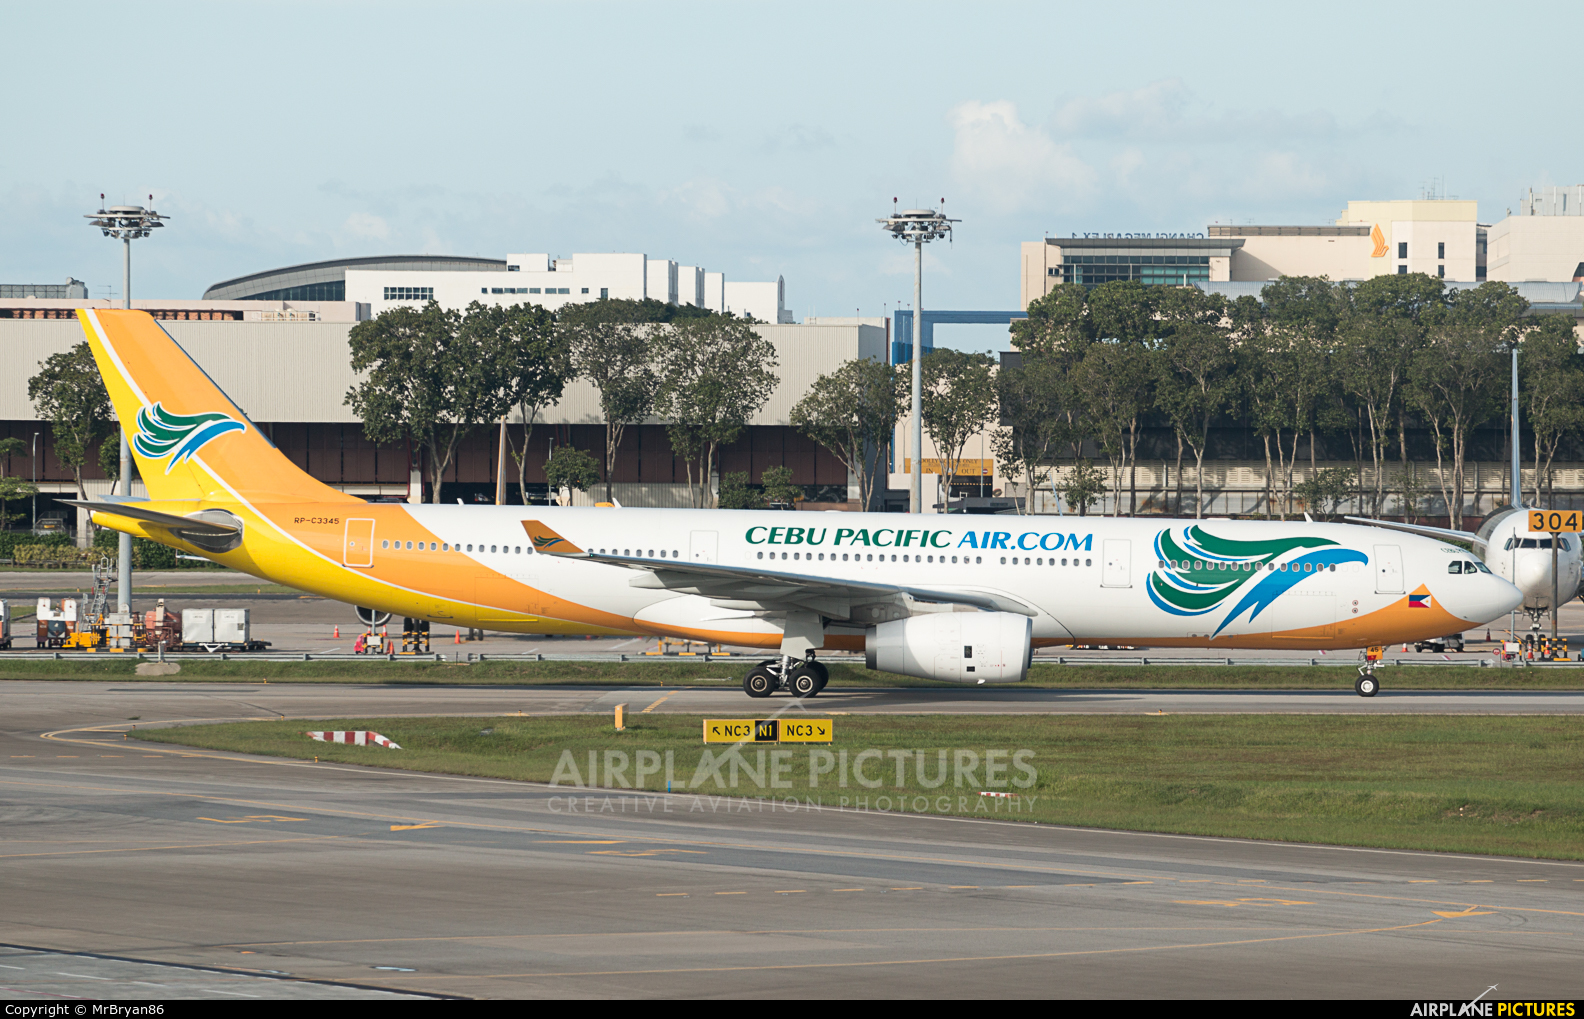 Cebu Pacific Air RP-C3345 aircraft at Singapore - Changi